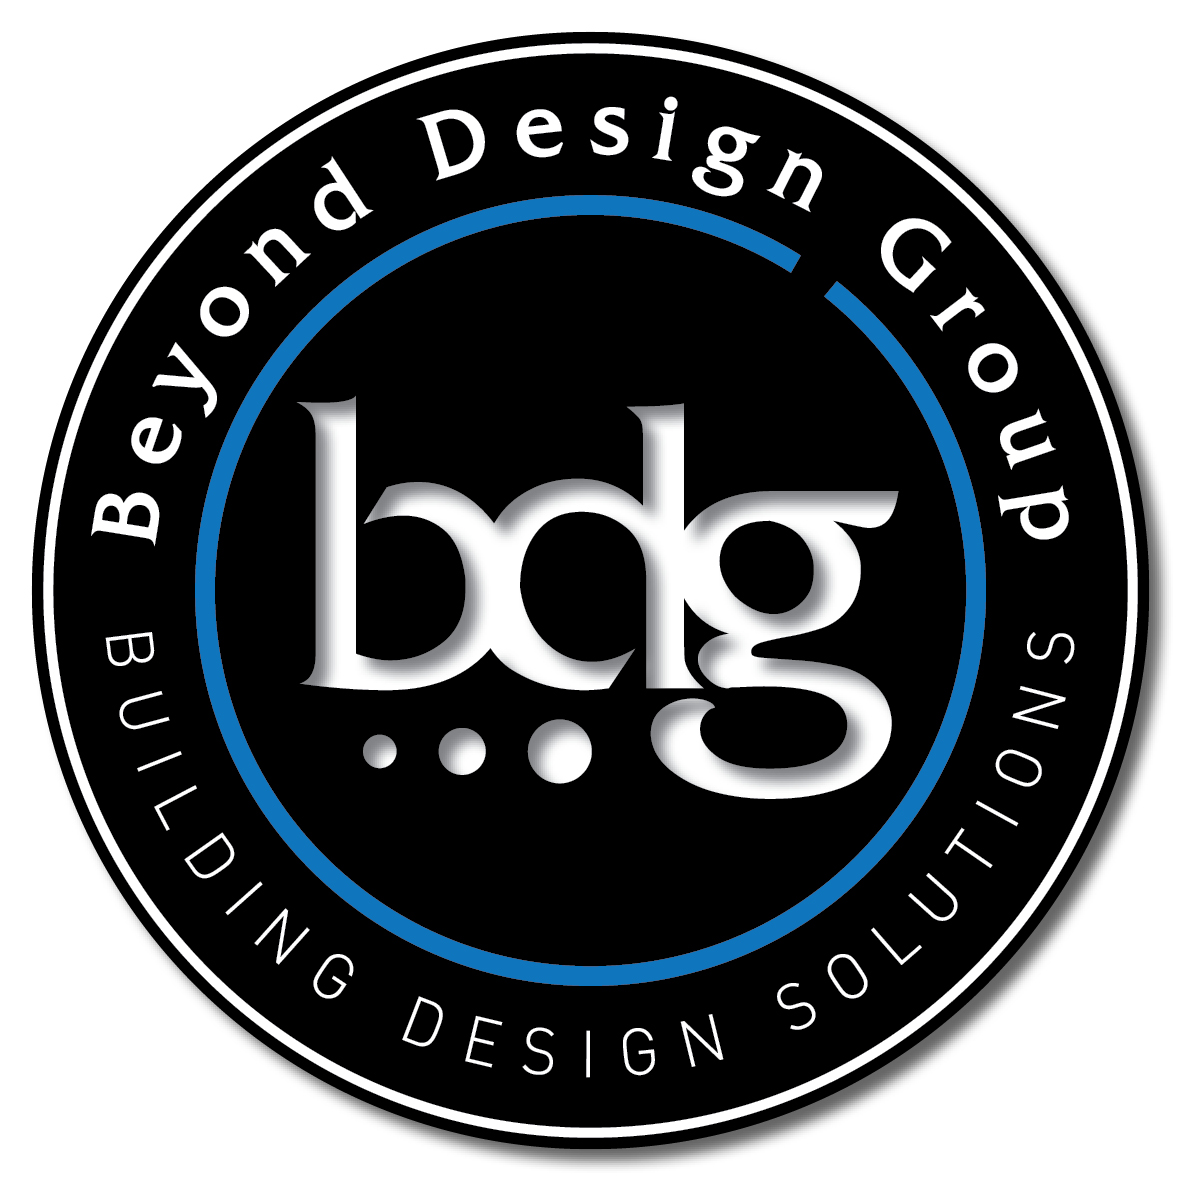 Beyond Design Group